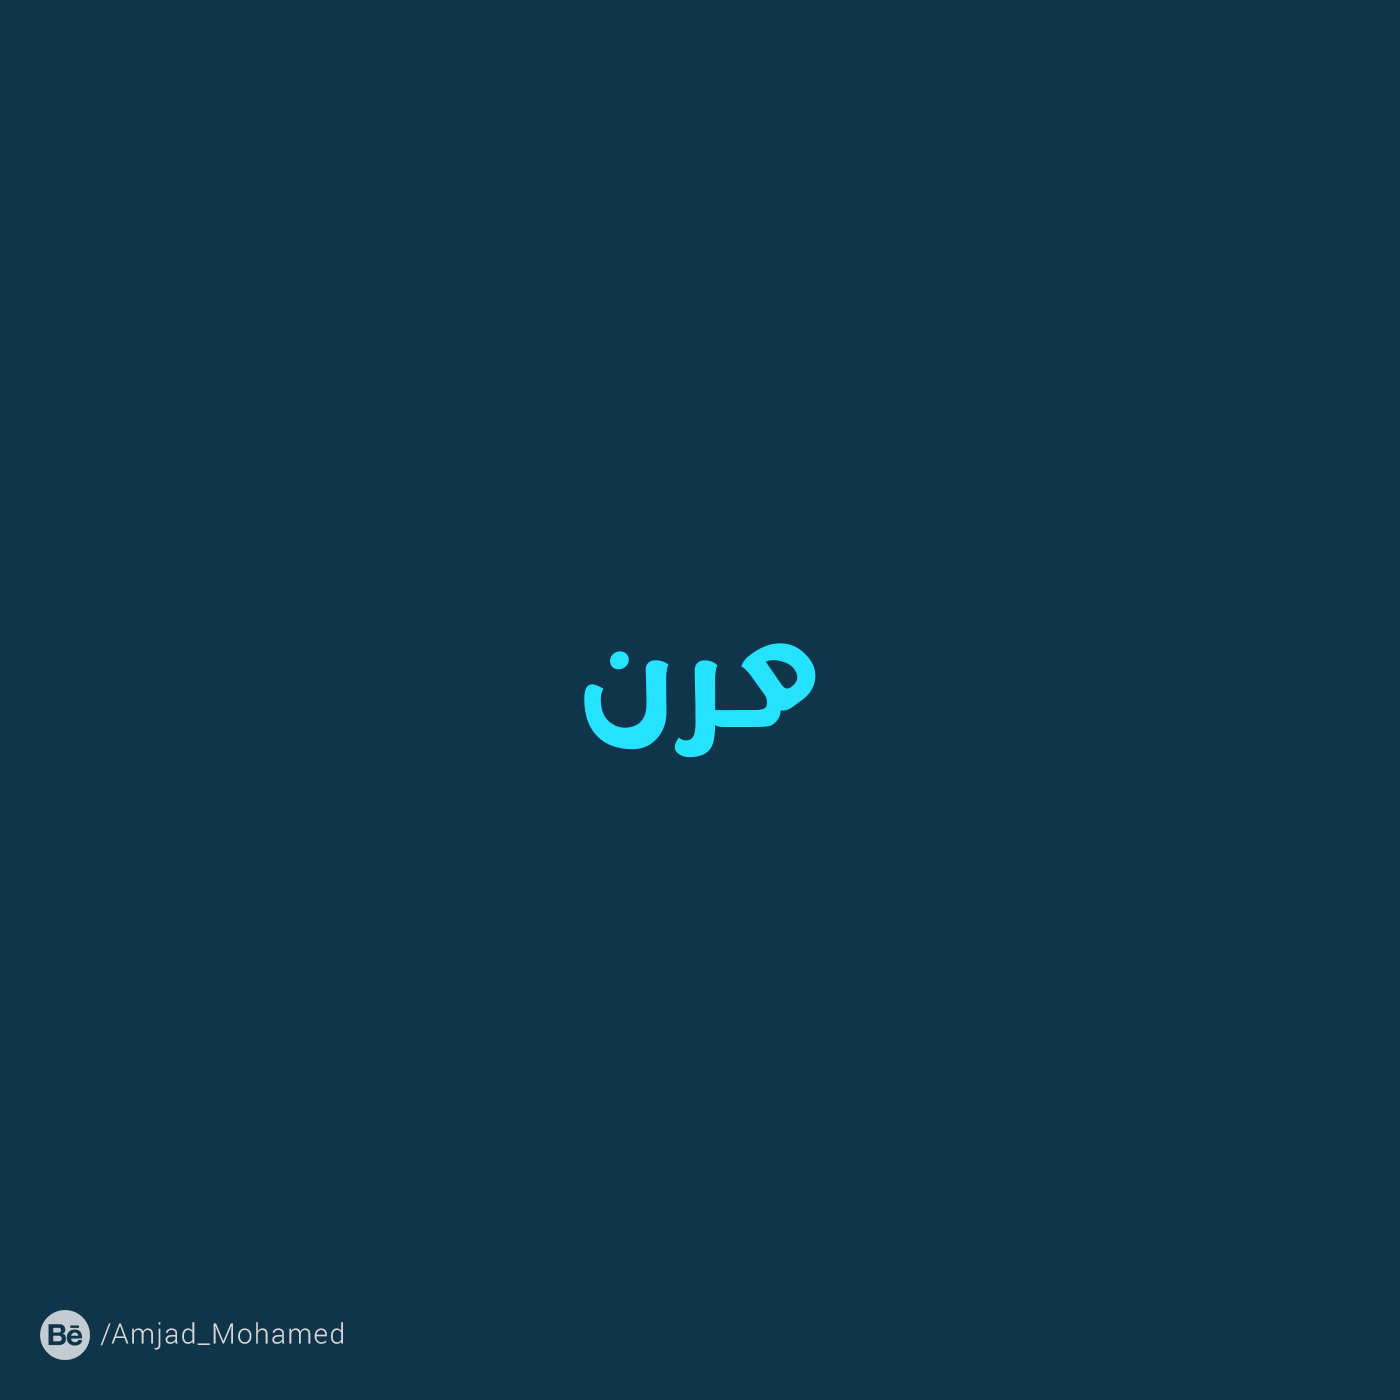 arabic words image creative logos ideas 100_Arabic_words_as_image 100_words_as_image designs minimalist new font